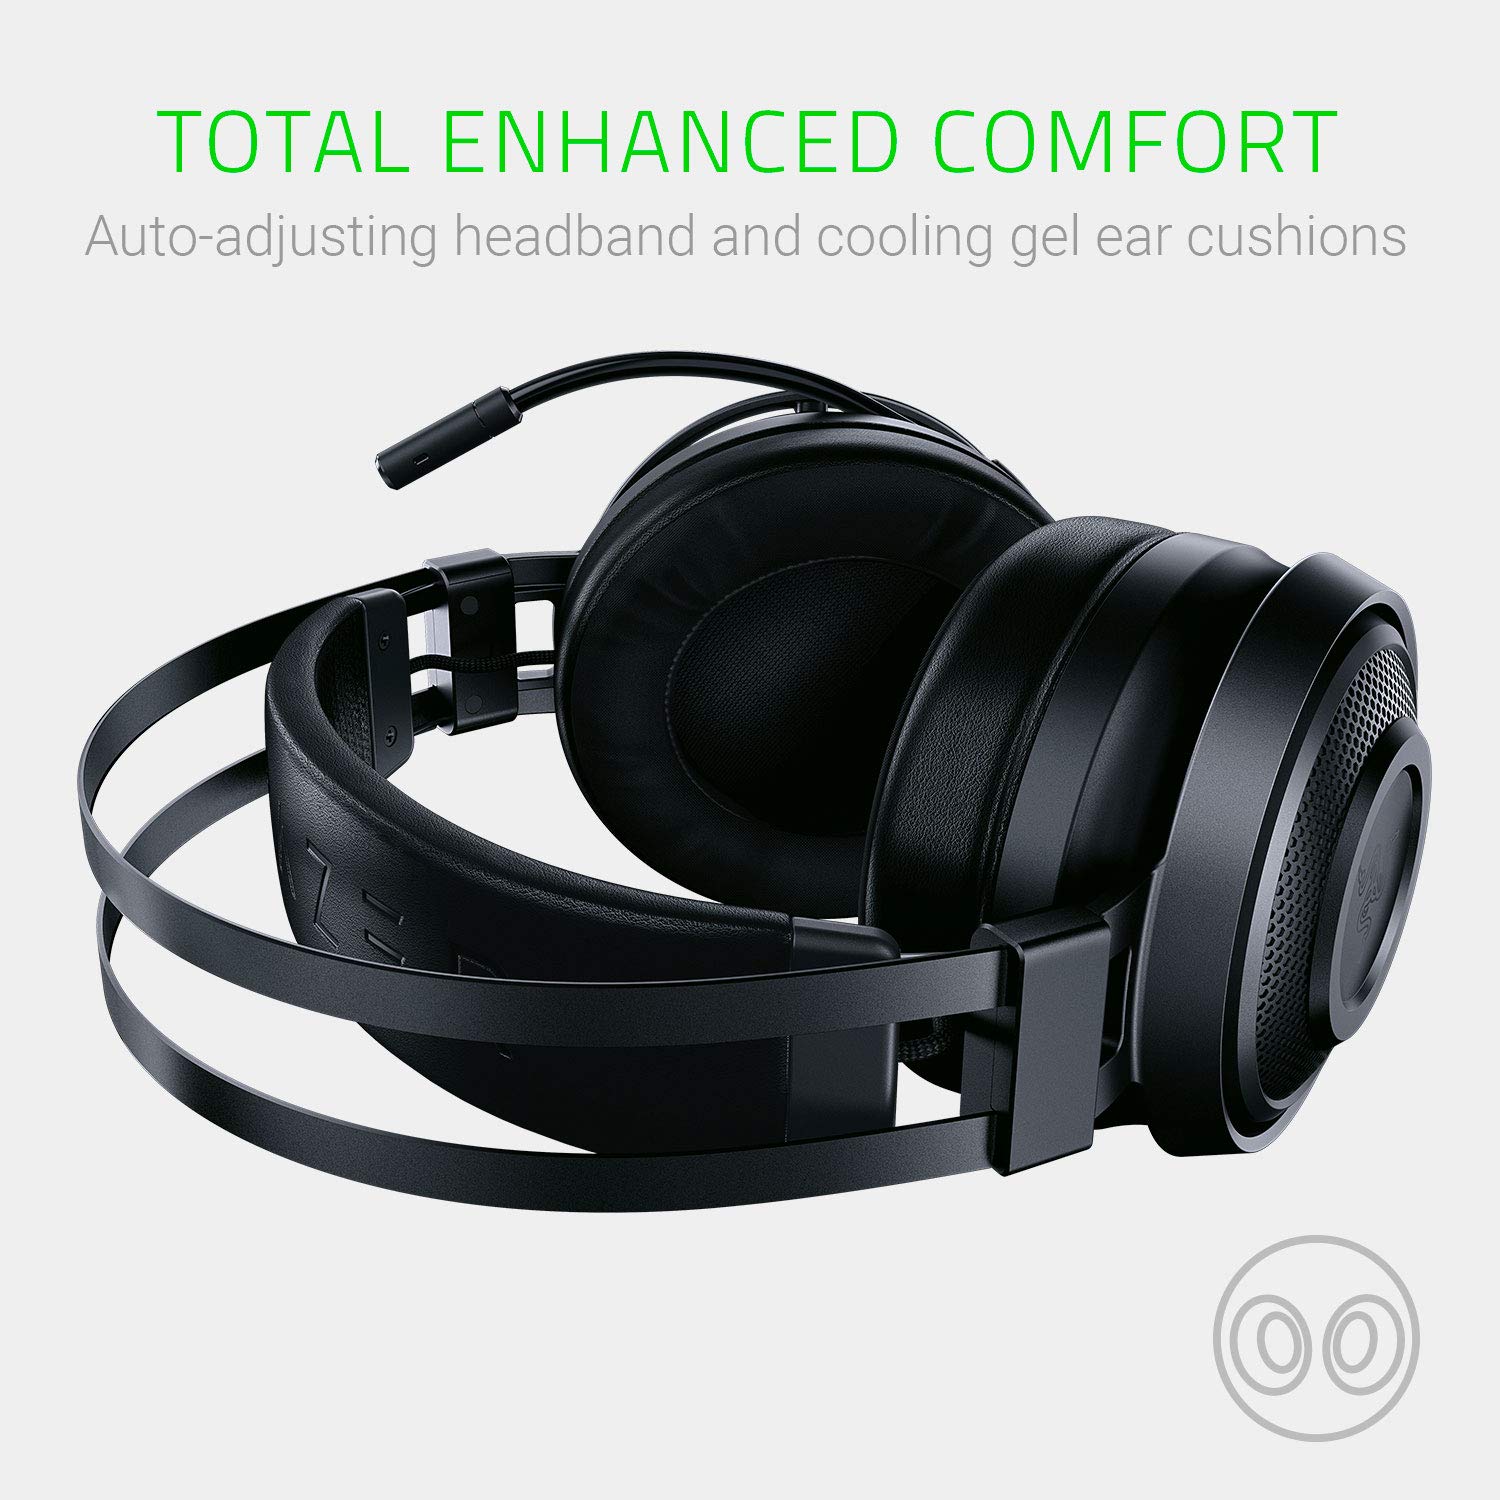 Razer Nari Essential THX Spatial Wireless Audio Gaming Headset (Renewed)